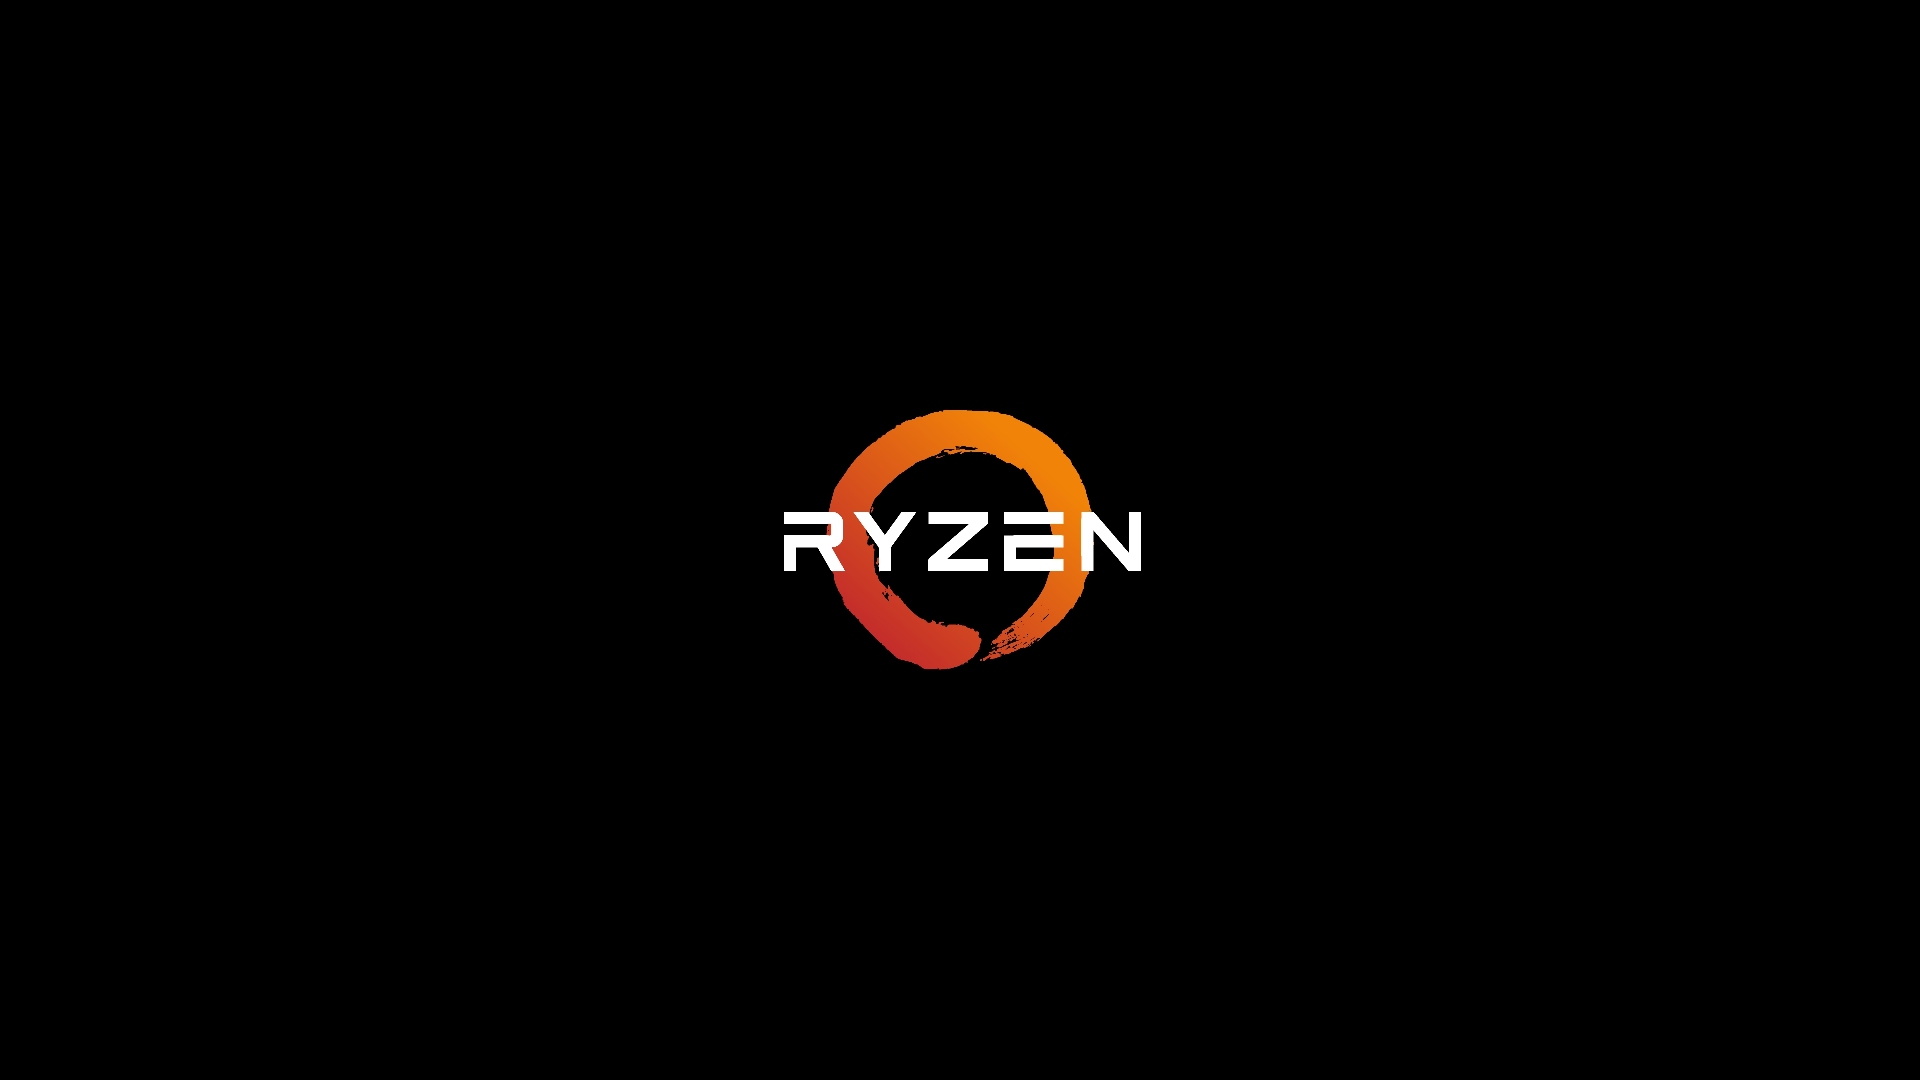 AMD RYZEN Logo 1920x1080